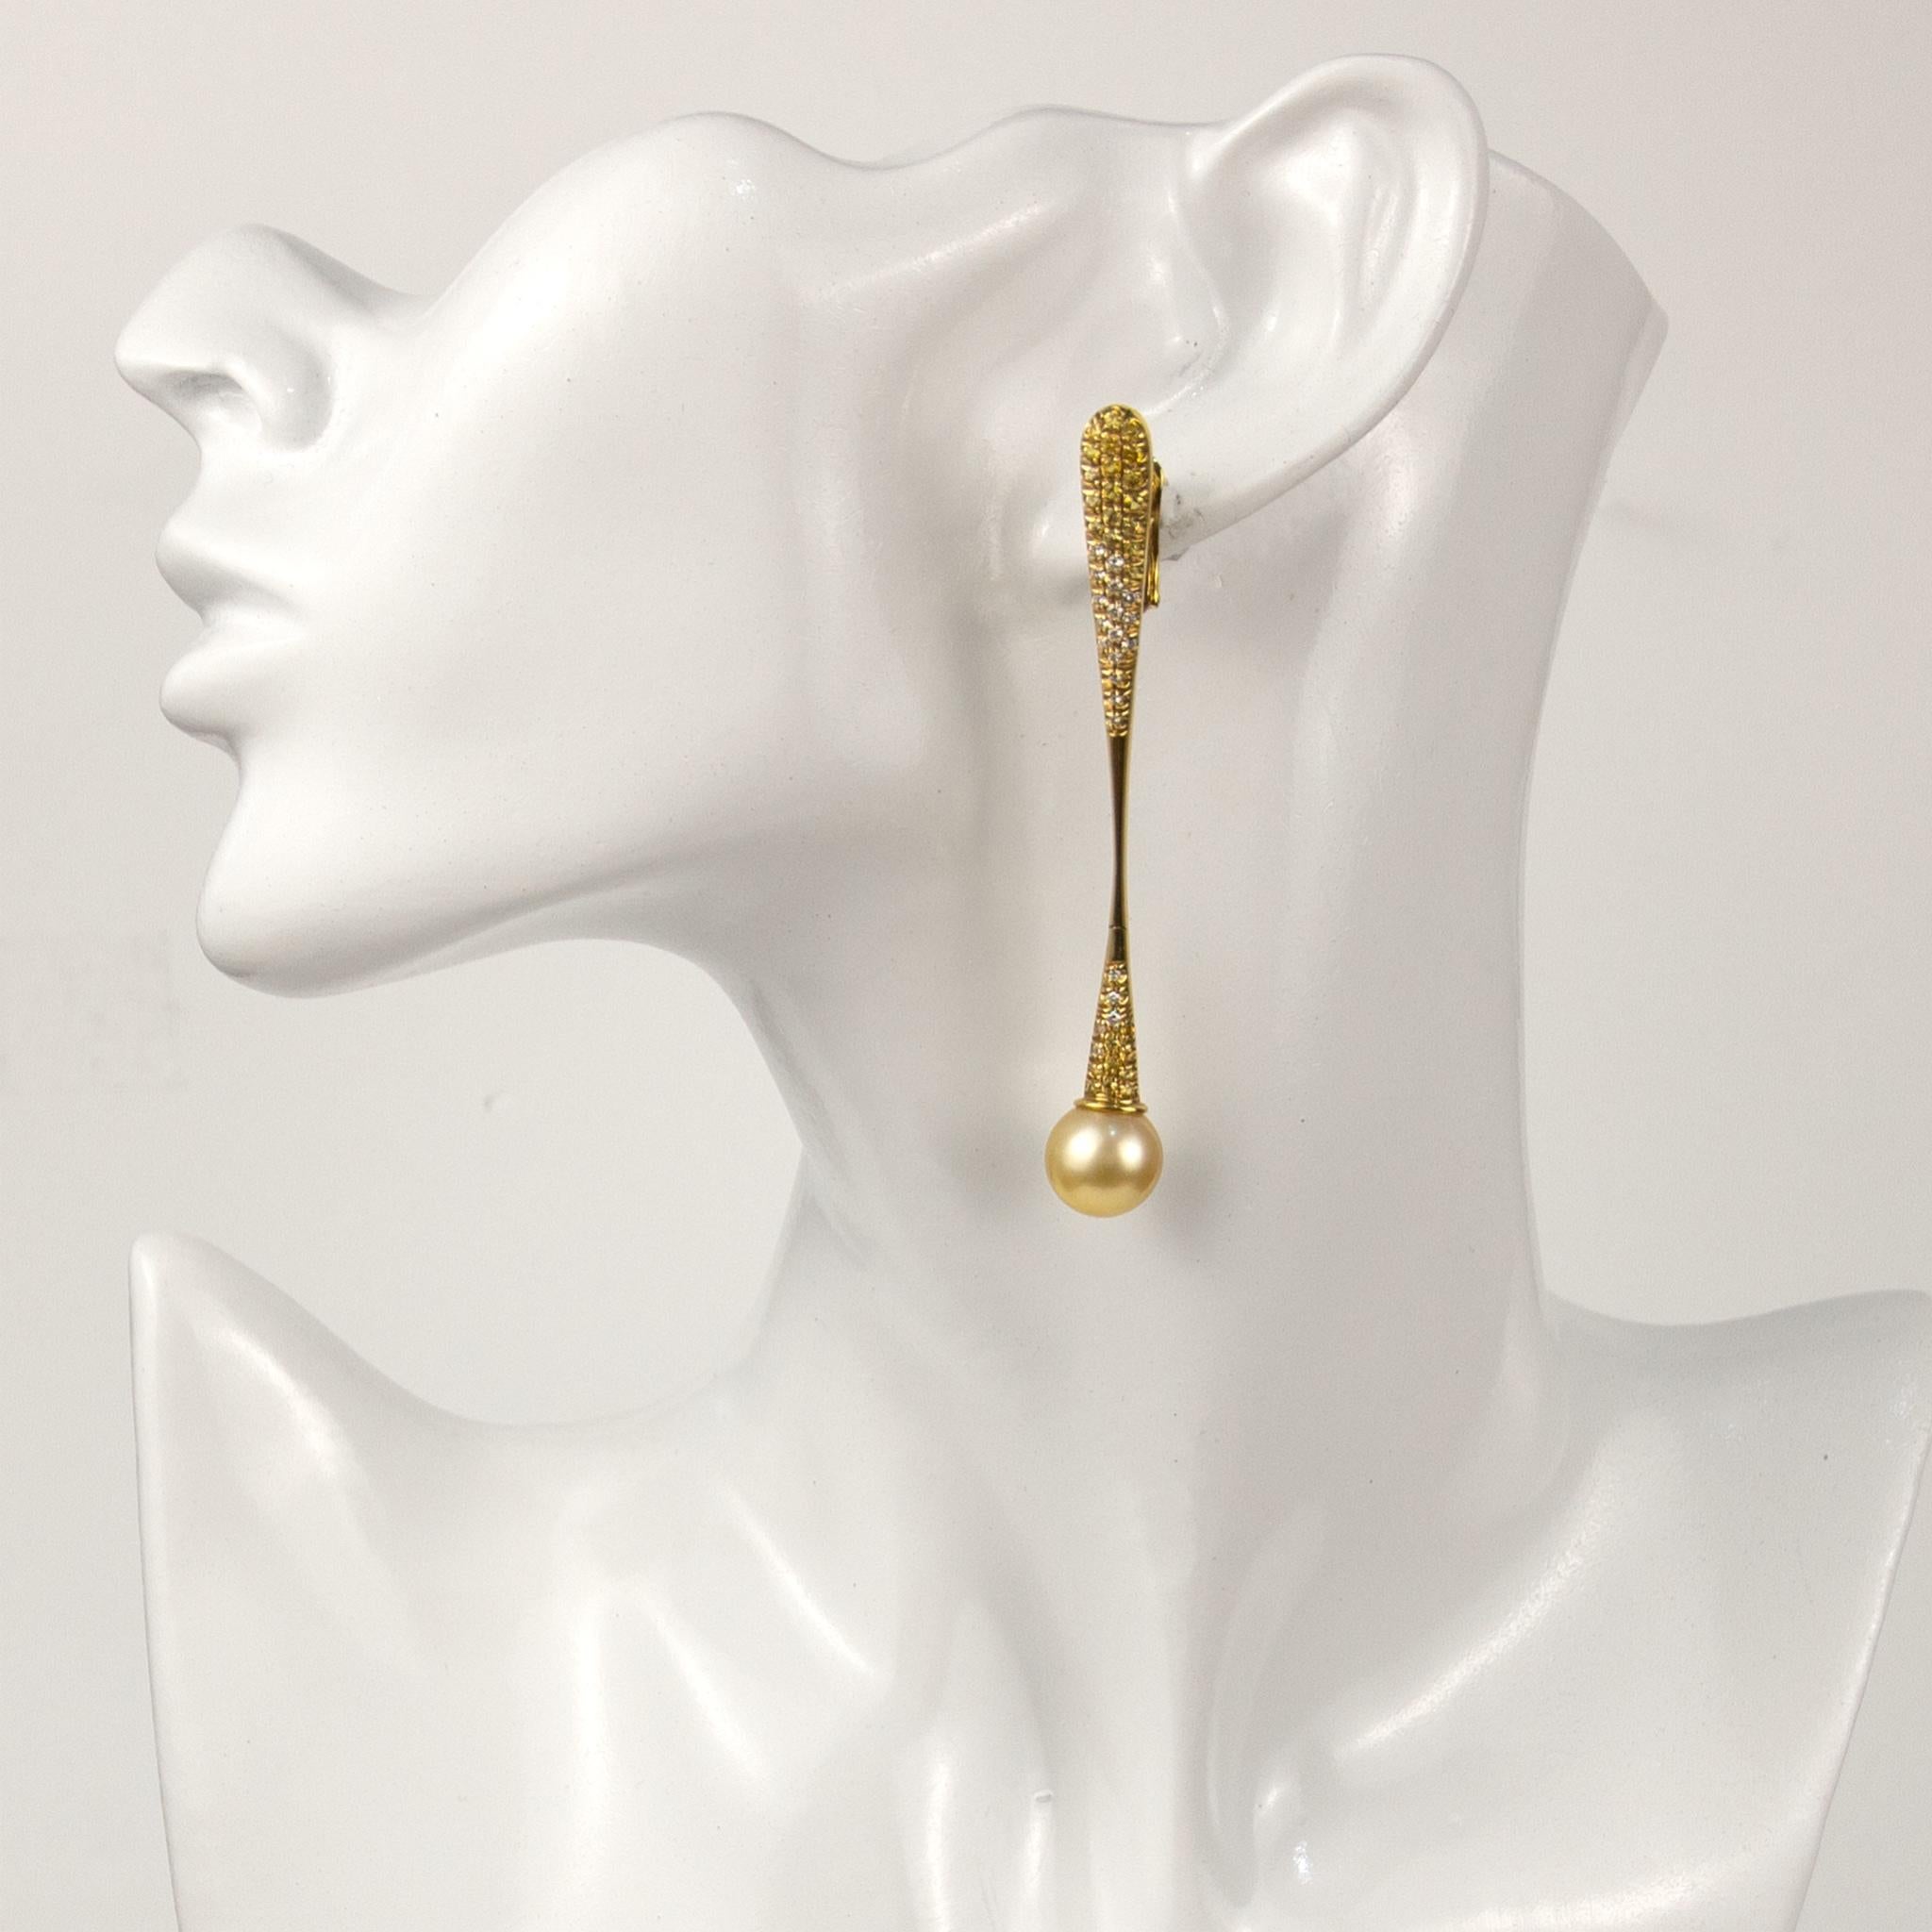 Brilliant Cut Stefan Hafner 18k Yellow Gold 0.56ctw Diamond&Sapphire Earrings For Sale